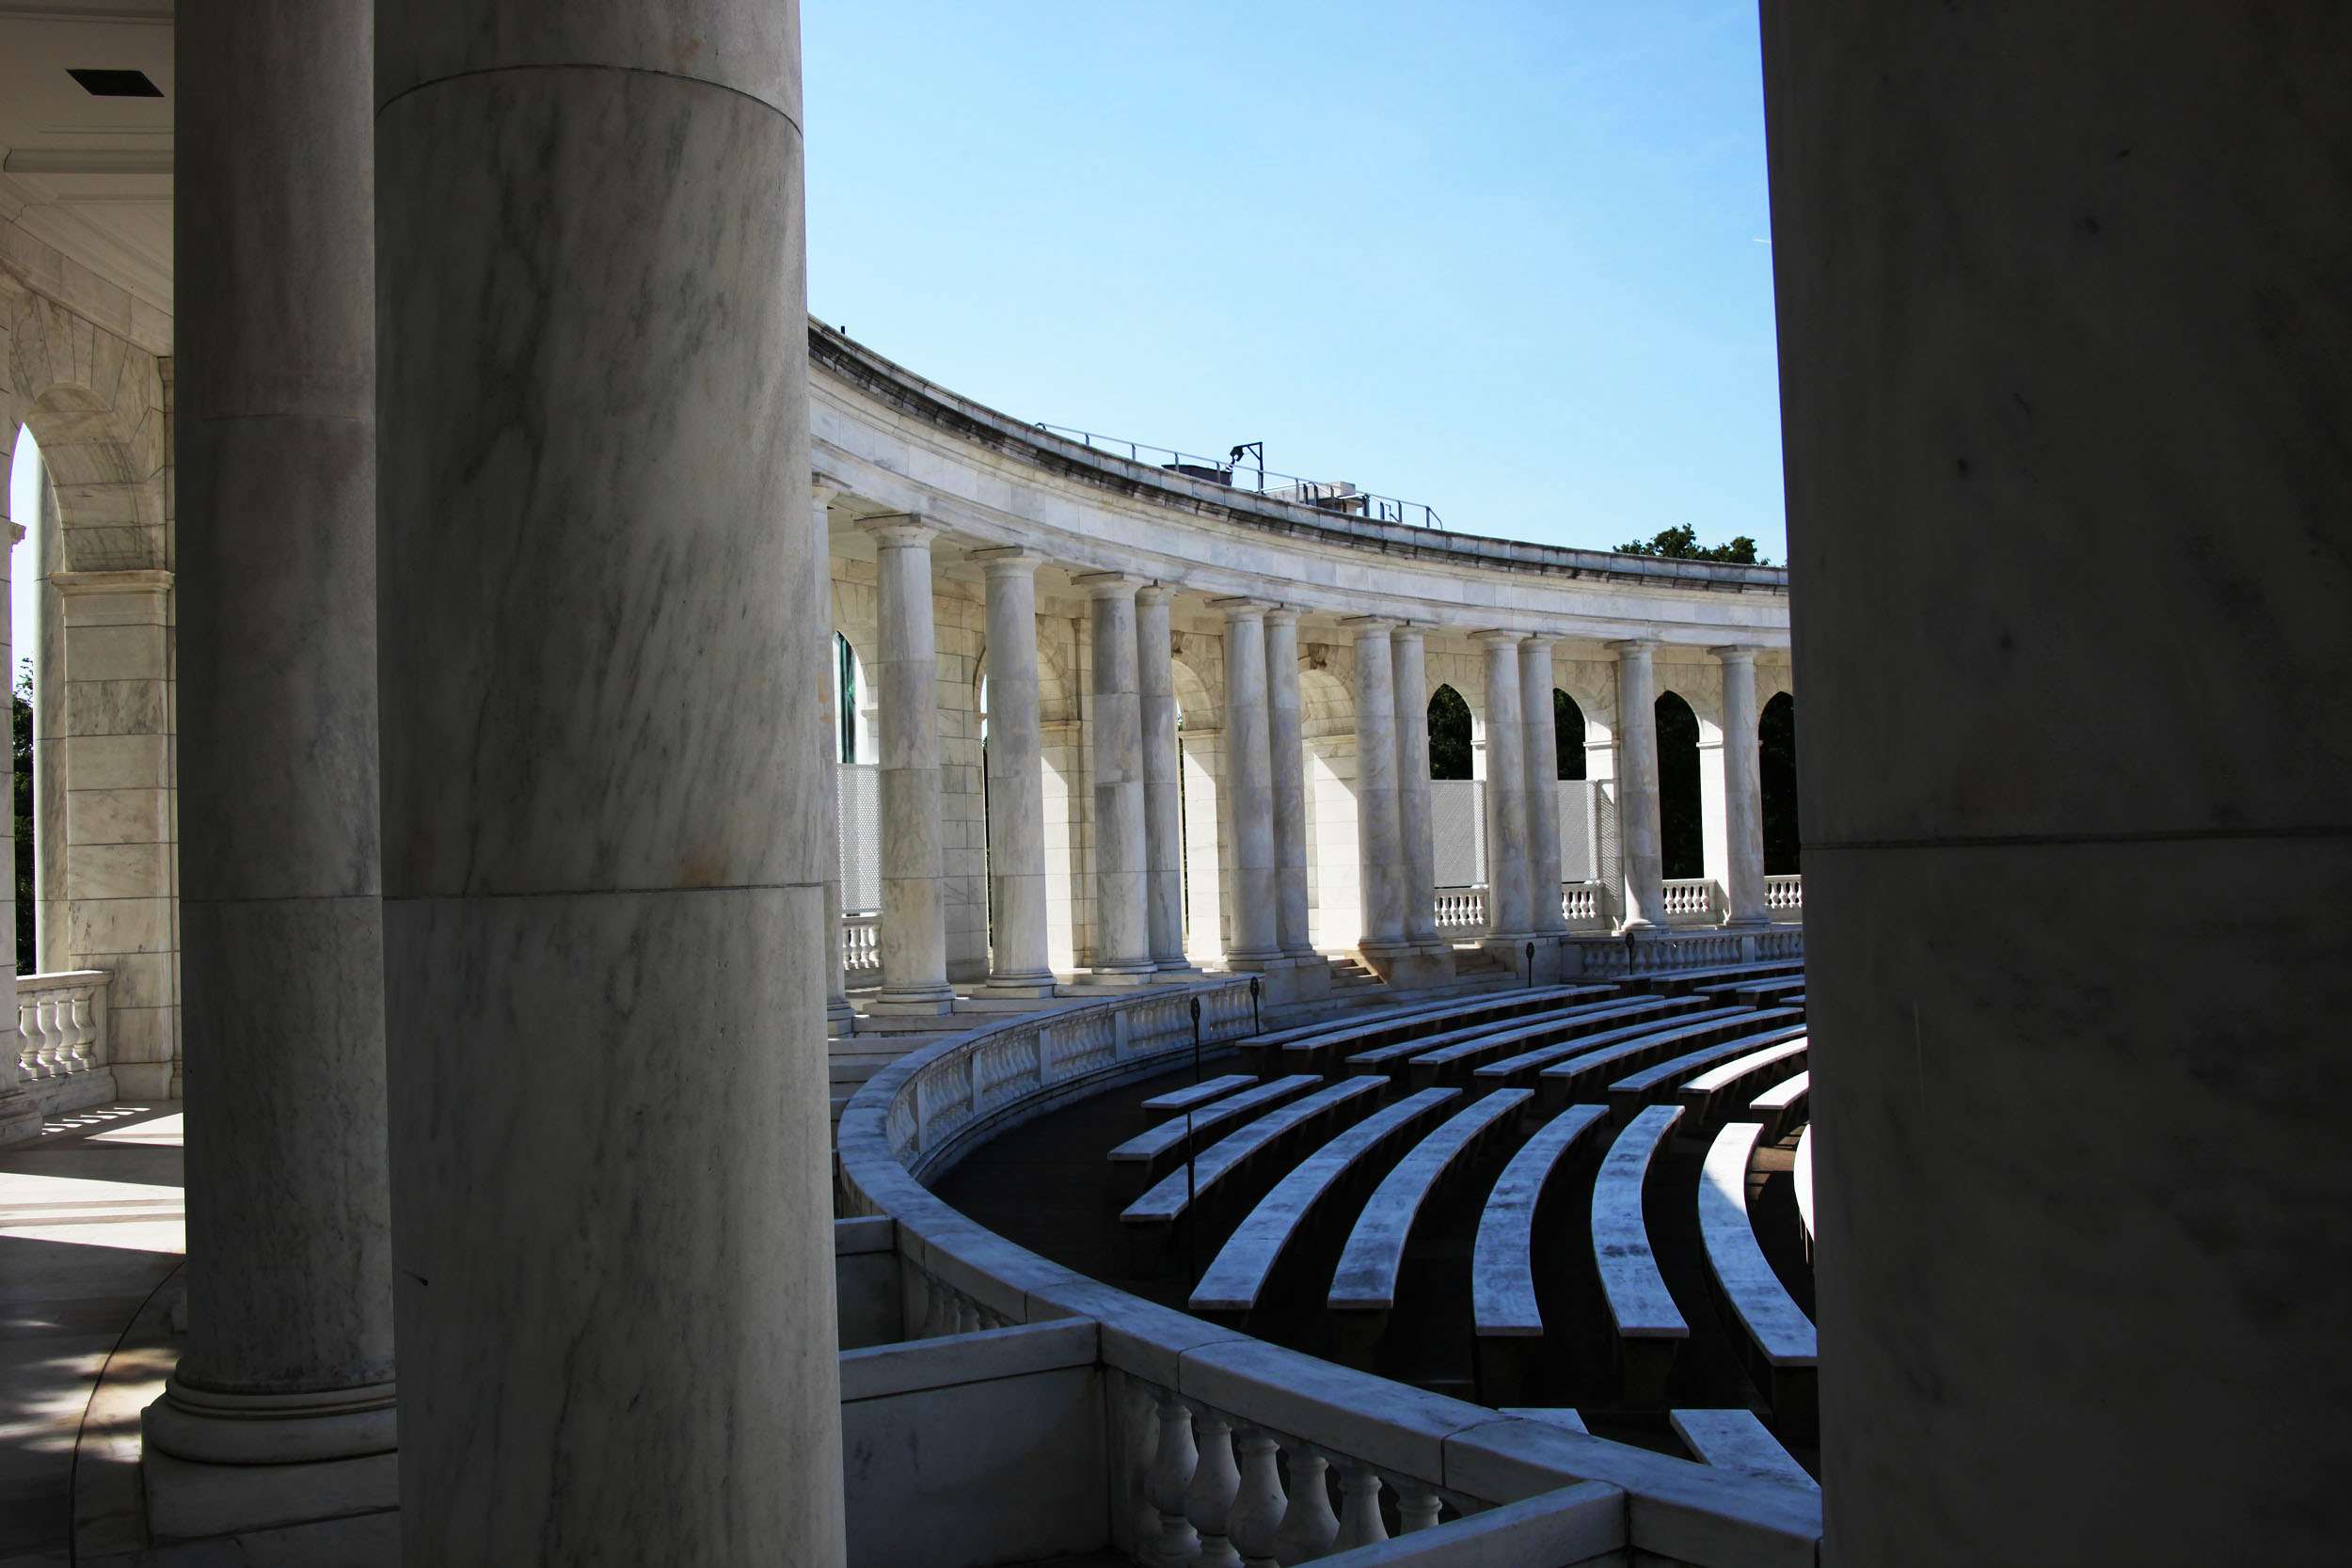 memorial amphitheater6 The Memorial Amphitheater at Arlington National Cemetery